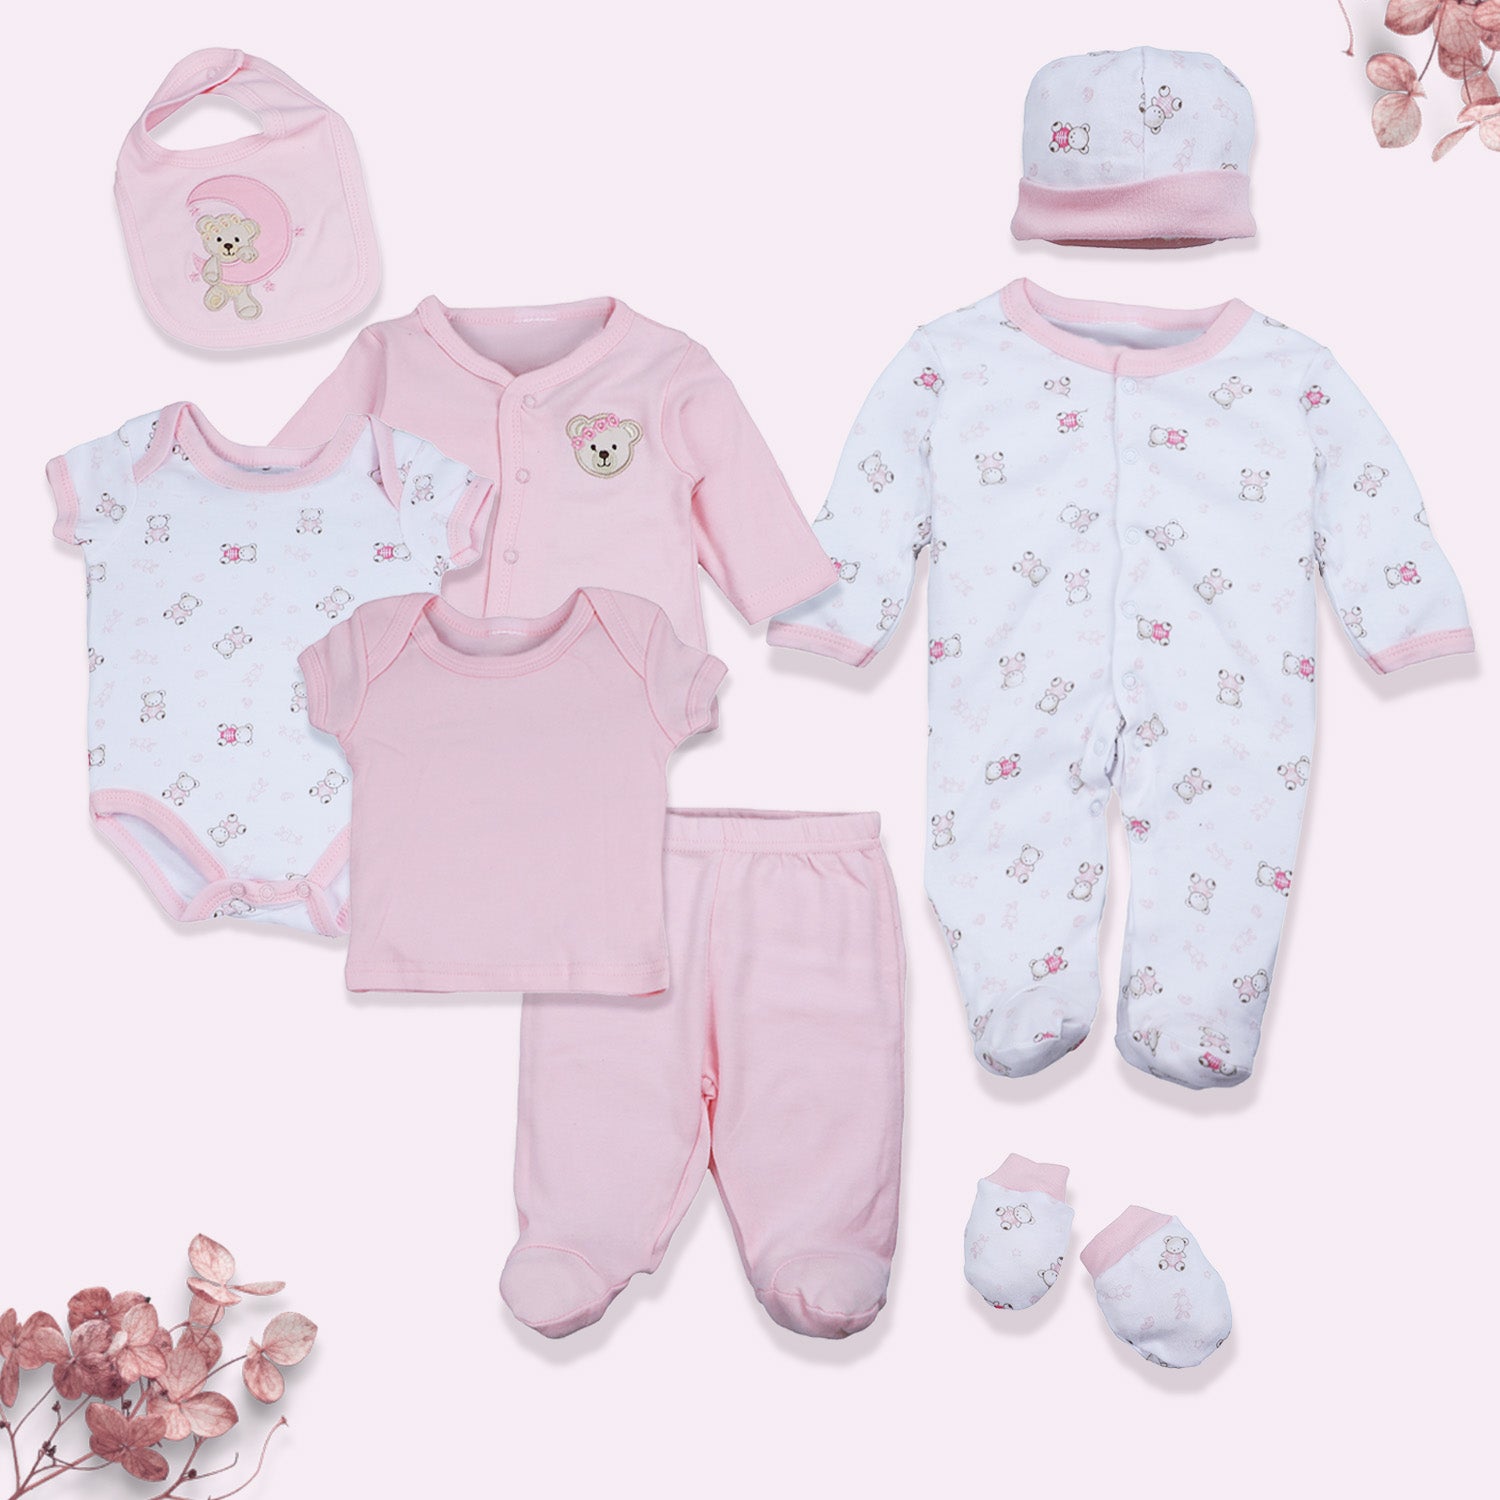 Baby Moo Sleepy Teddy Cotton Infant Essentials 8 pcs Romper Gift Set - Pink - Baby Moo